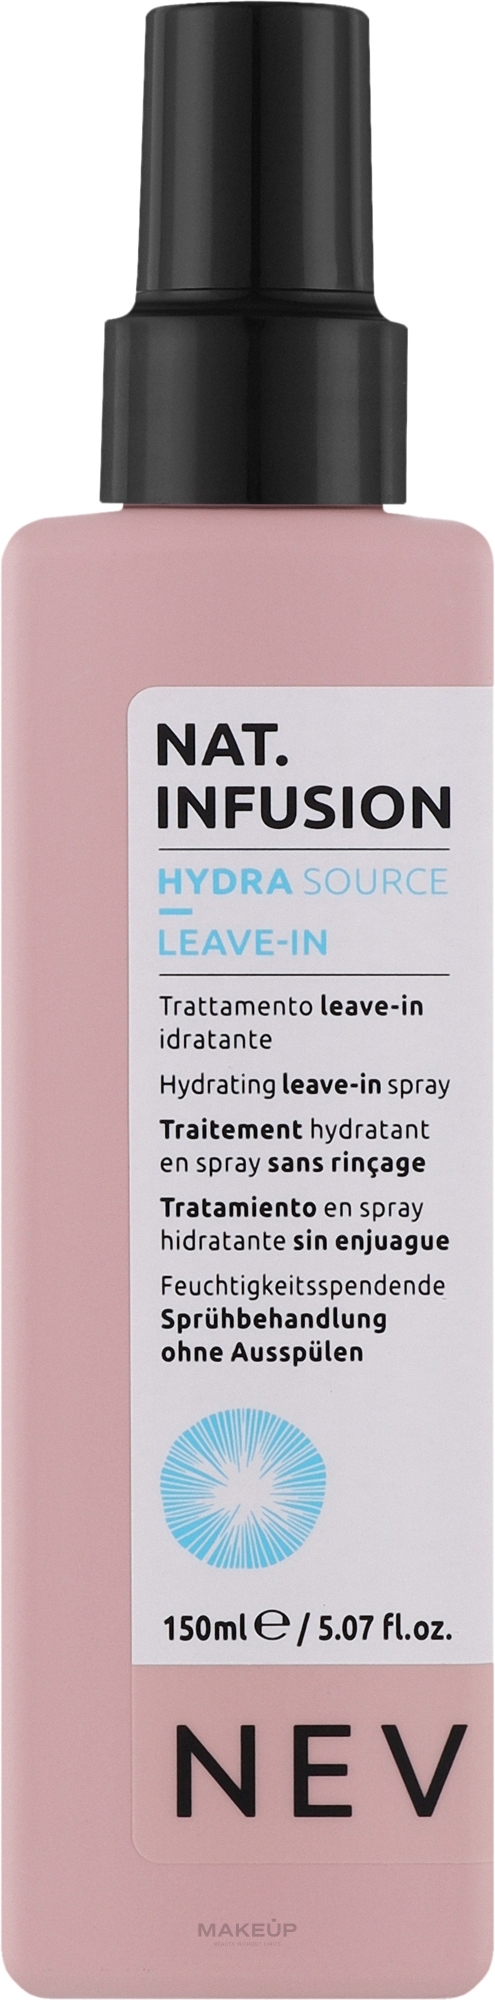 Несмываемый, увлажняющий спрей для сухих волос - Nevitaly Hydrating Leave-in Spray — фото 150ml